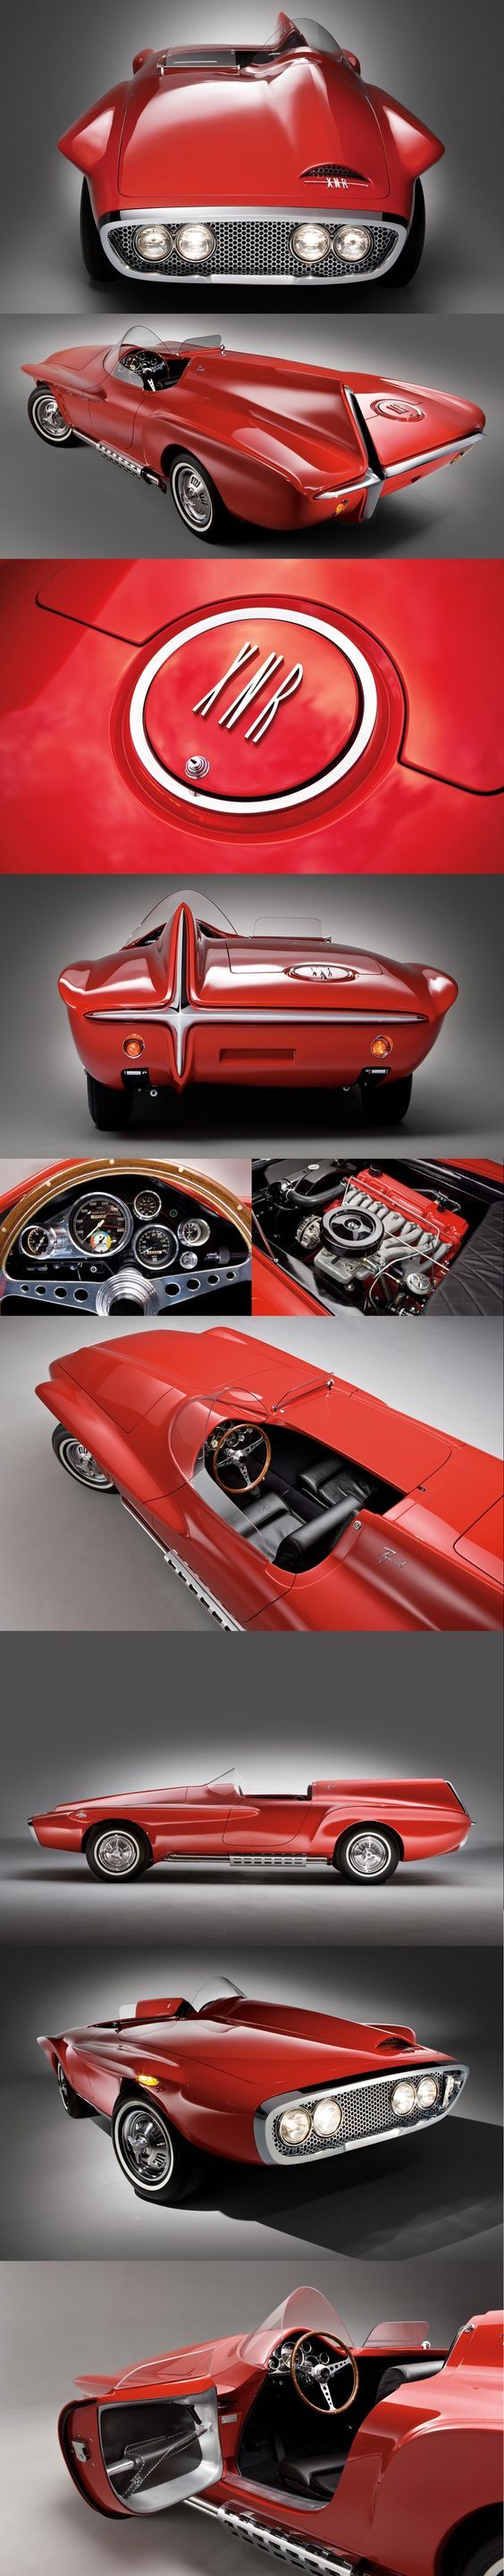 1960 plymouth xnr concept car - Plymouth, 1960, Longpost, Car, Red